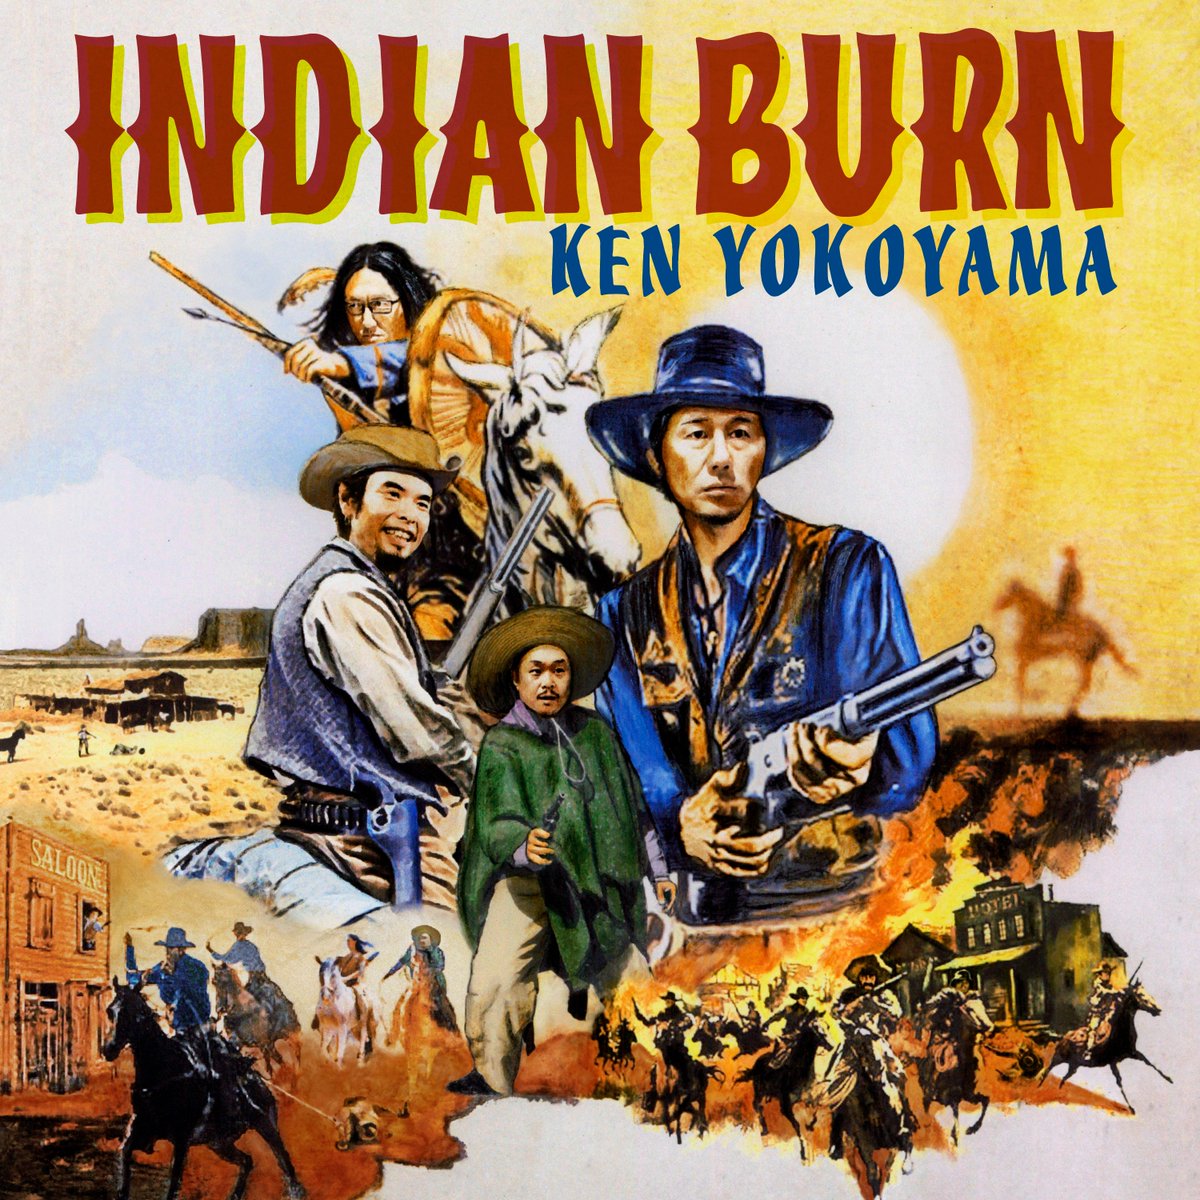 【Ken Yokoyama】

New Album
「Indian Burn」

この後2/28(水)0:00〜

配信開始！

KenYokoyama.lnk.to/IndianBurn